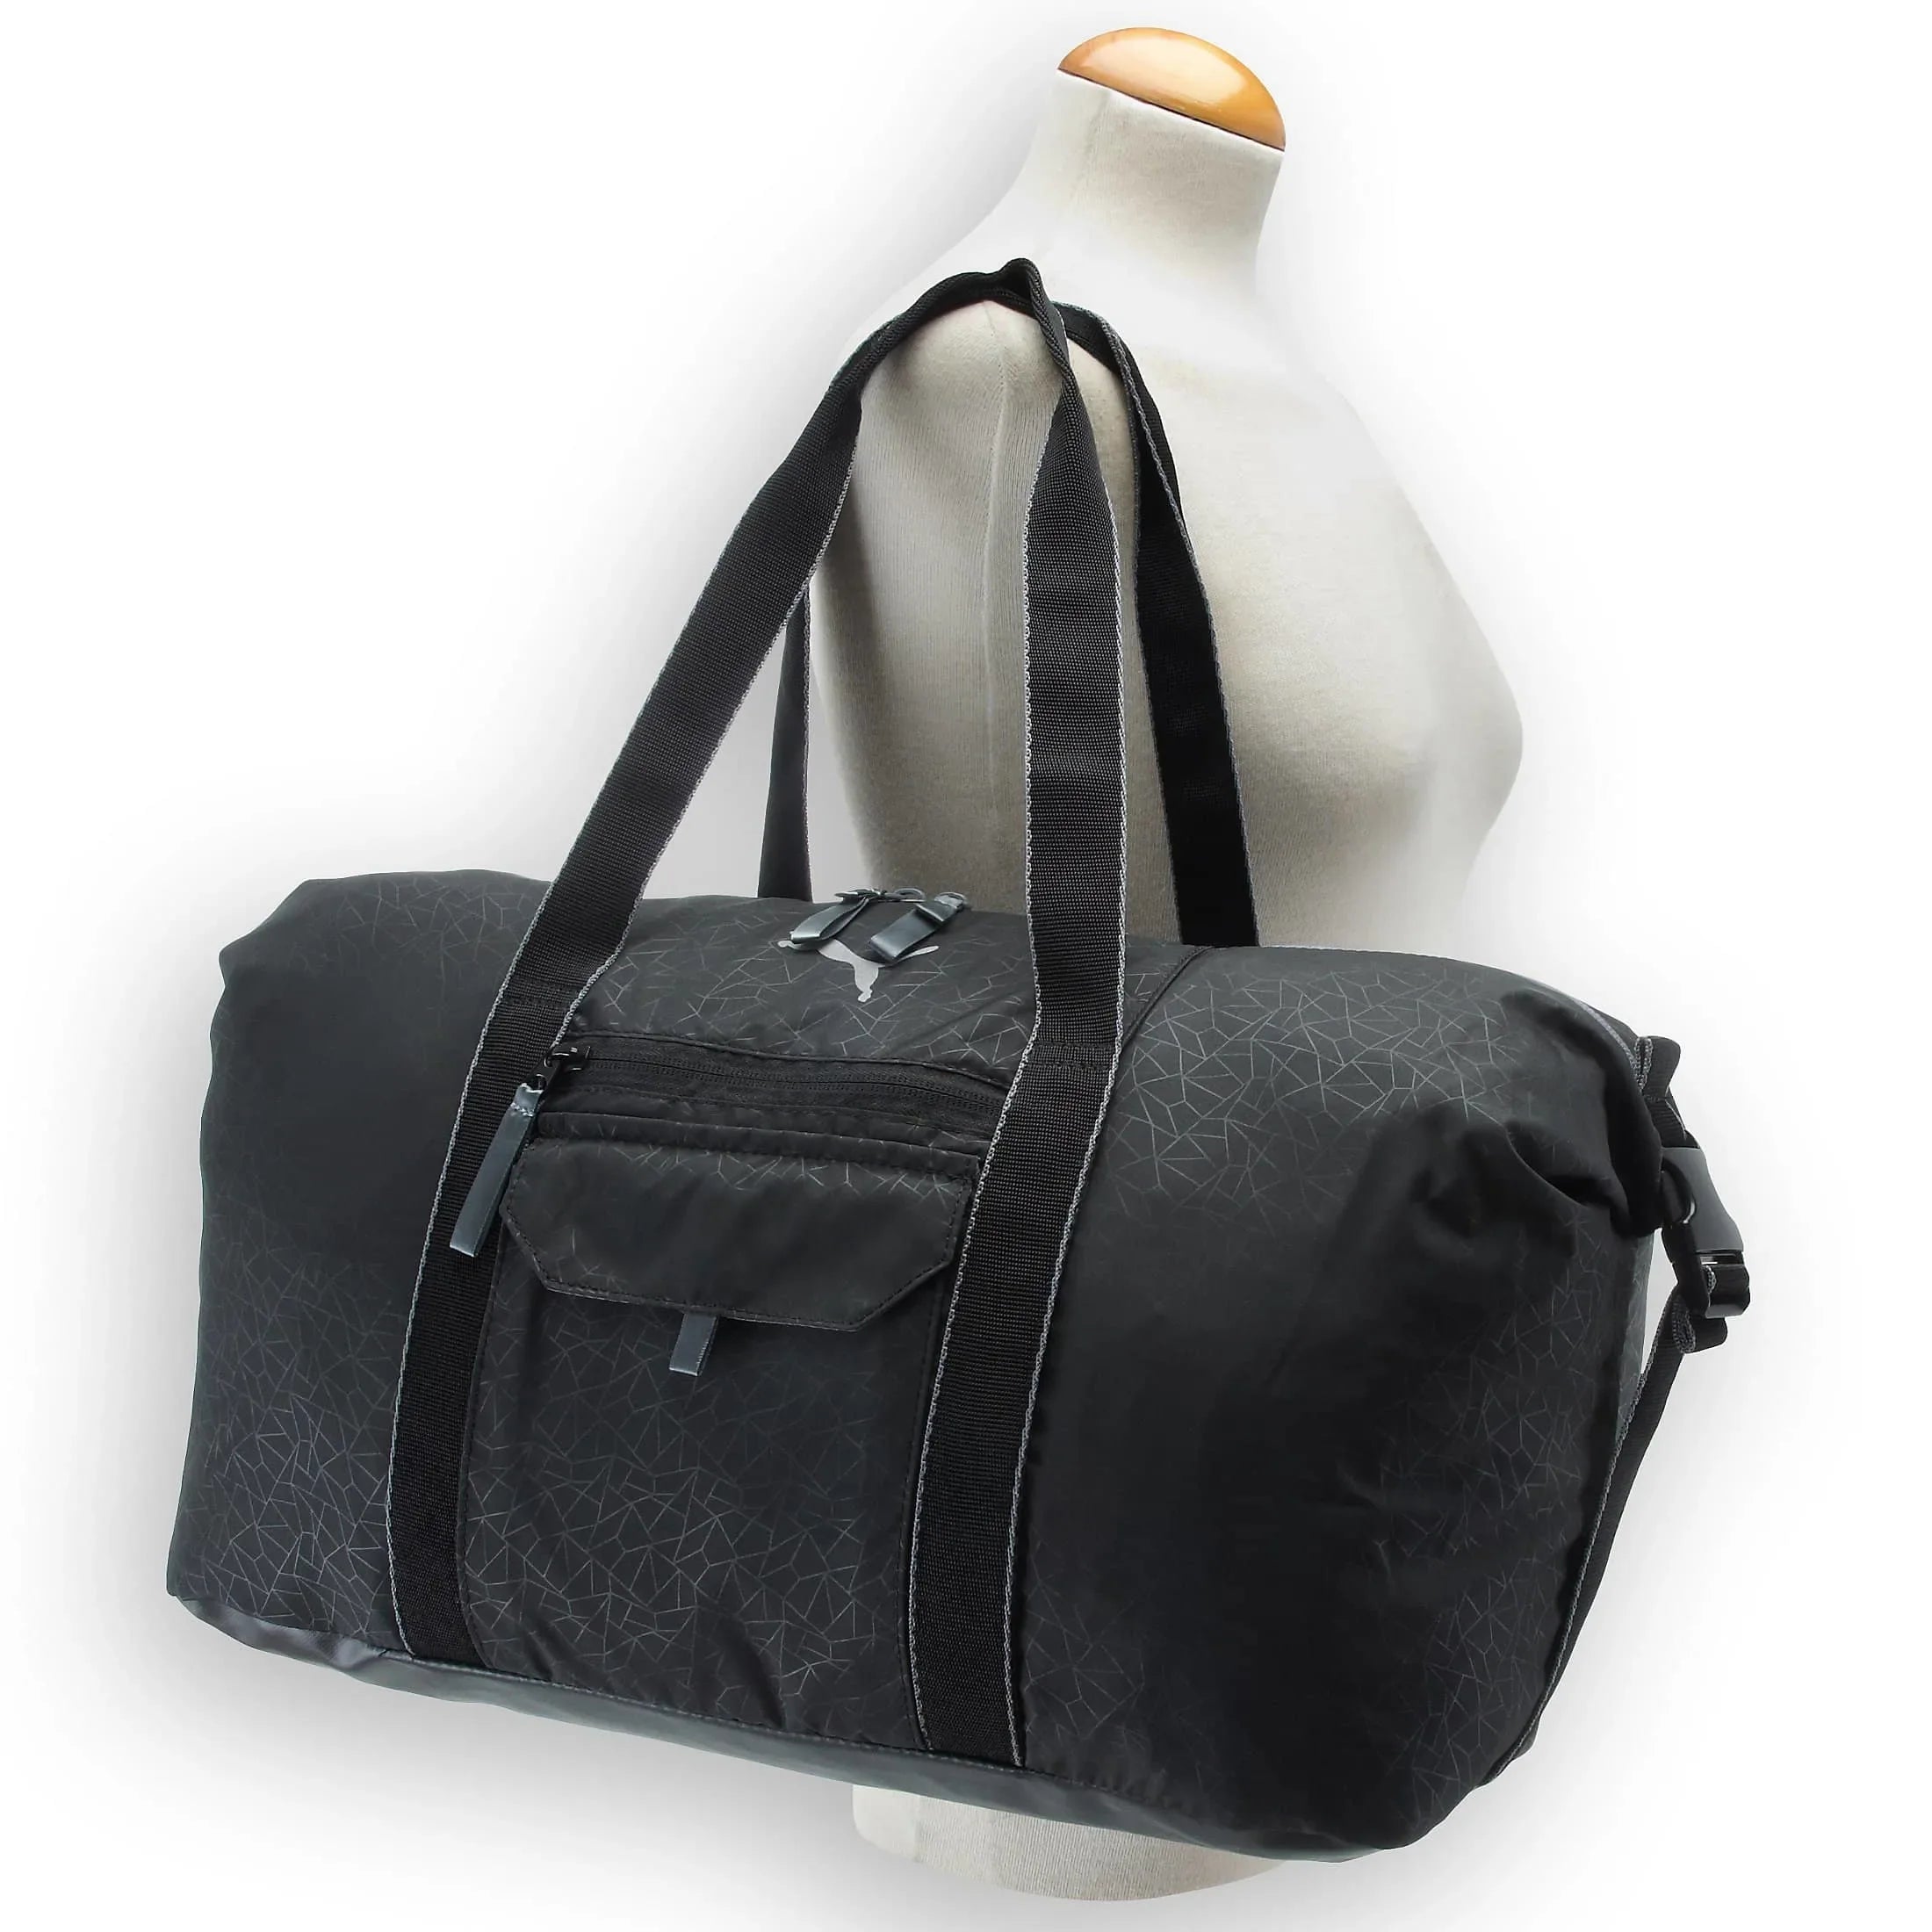 Puma Sports Fit AT Workout Bag sports bag 43 cm - puma black-quiet shade